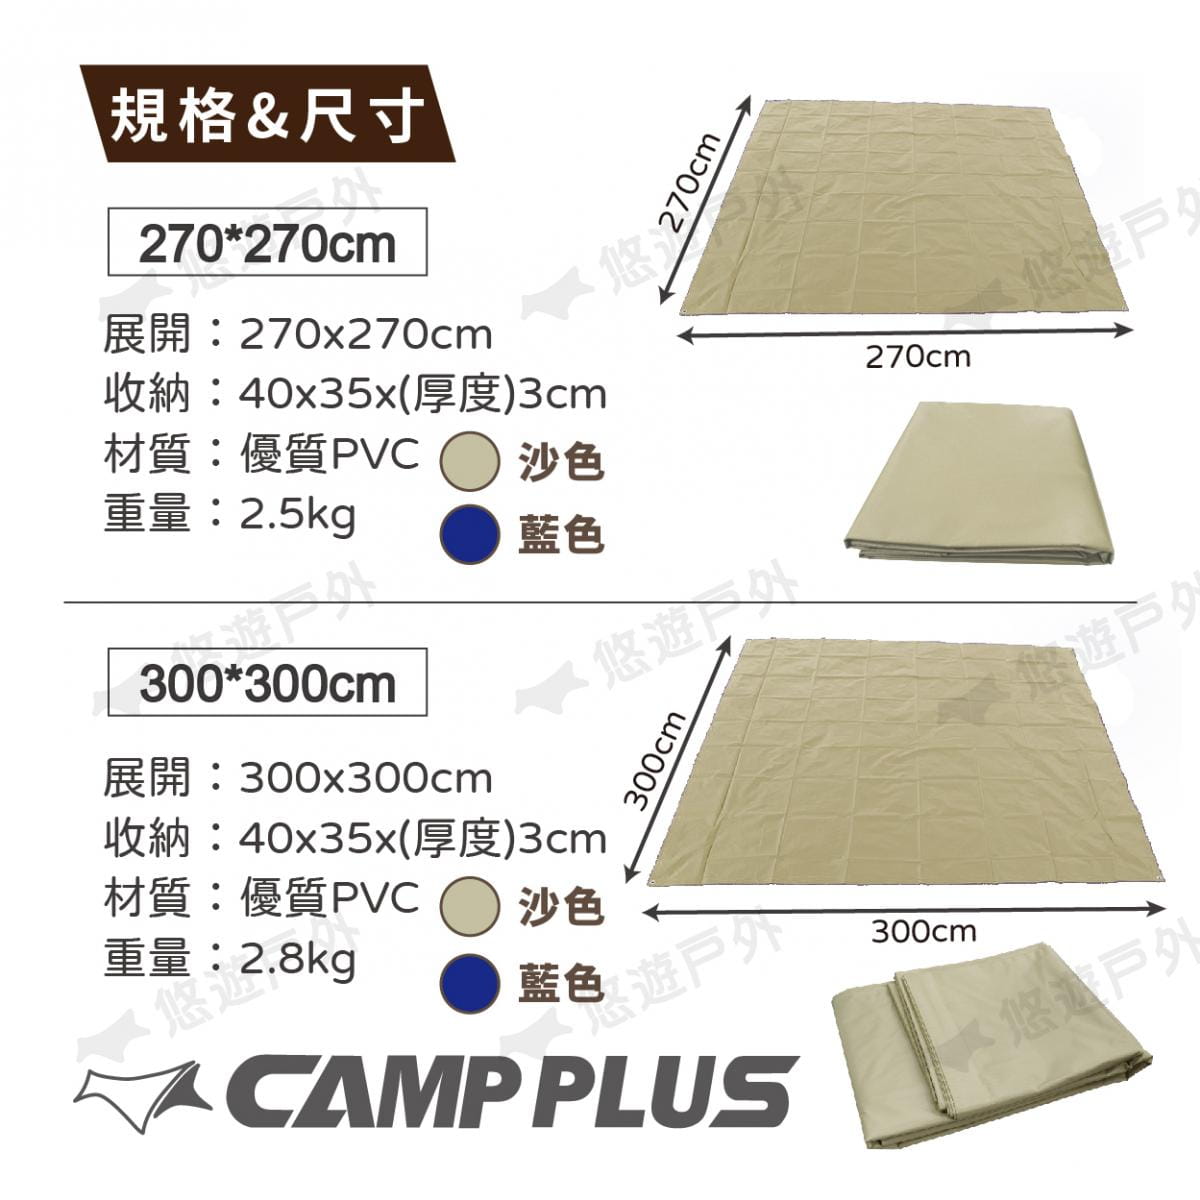 【Camp Plus】【CAMP PLUS】PVC地墊 藍色地布_300x300_含大網袋 (悠遊戶外) 8